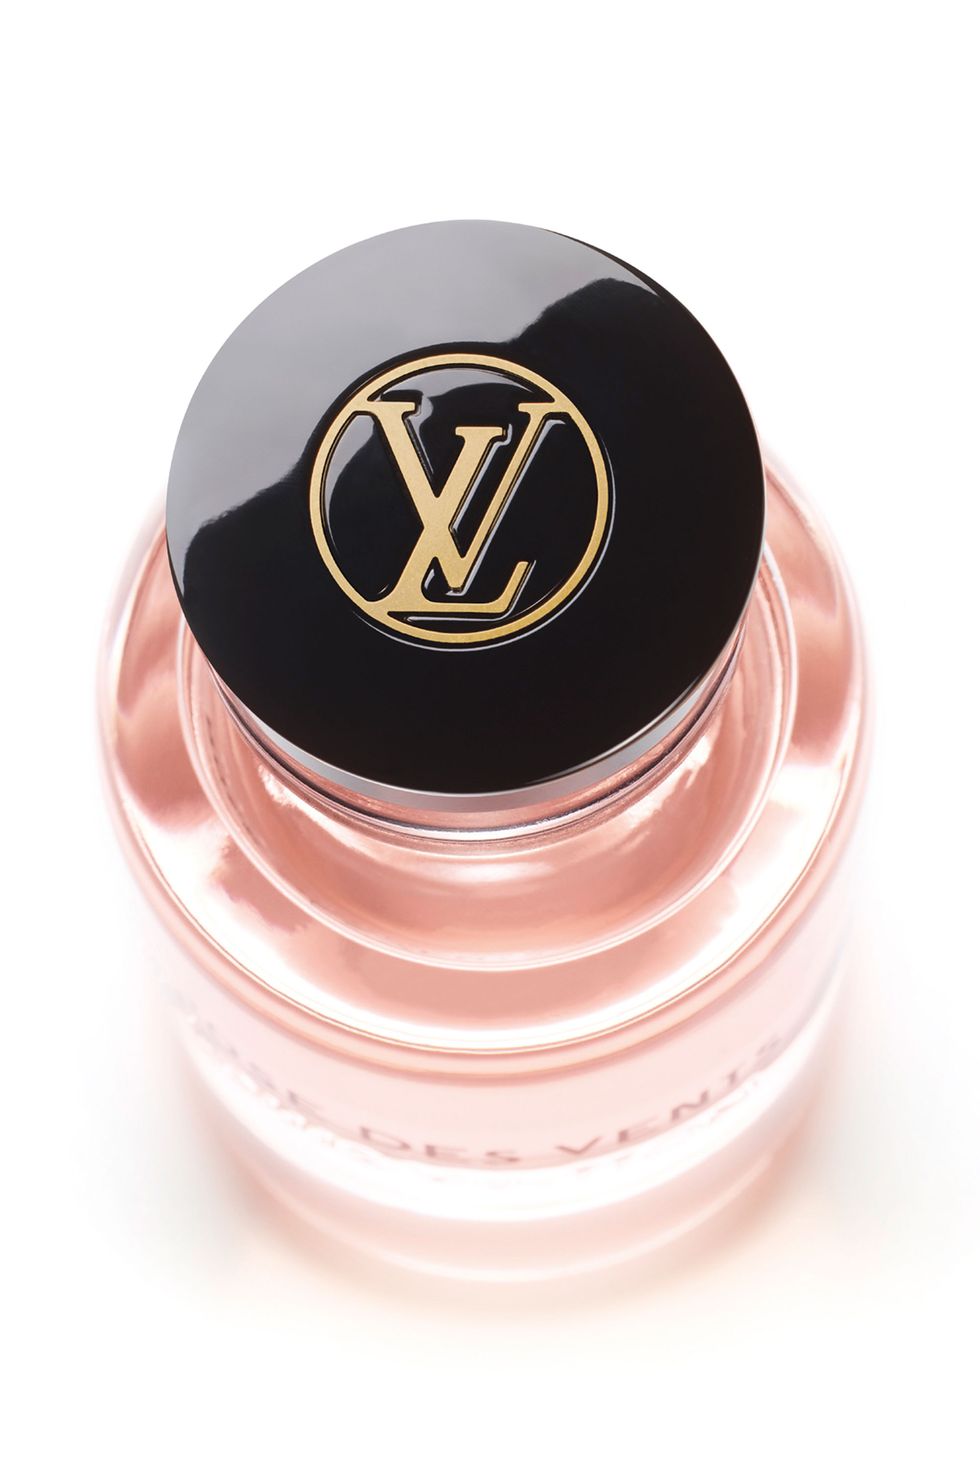 Louis Vuitton fragrance